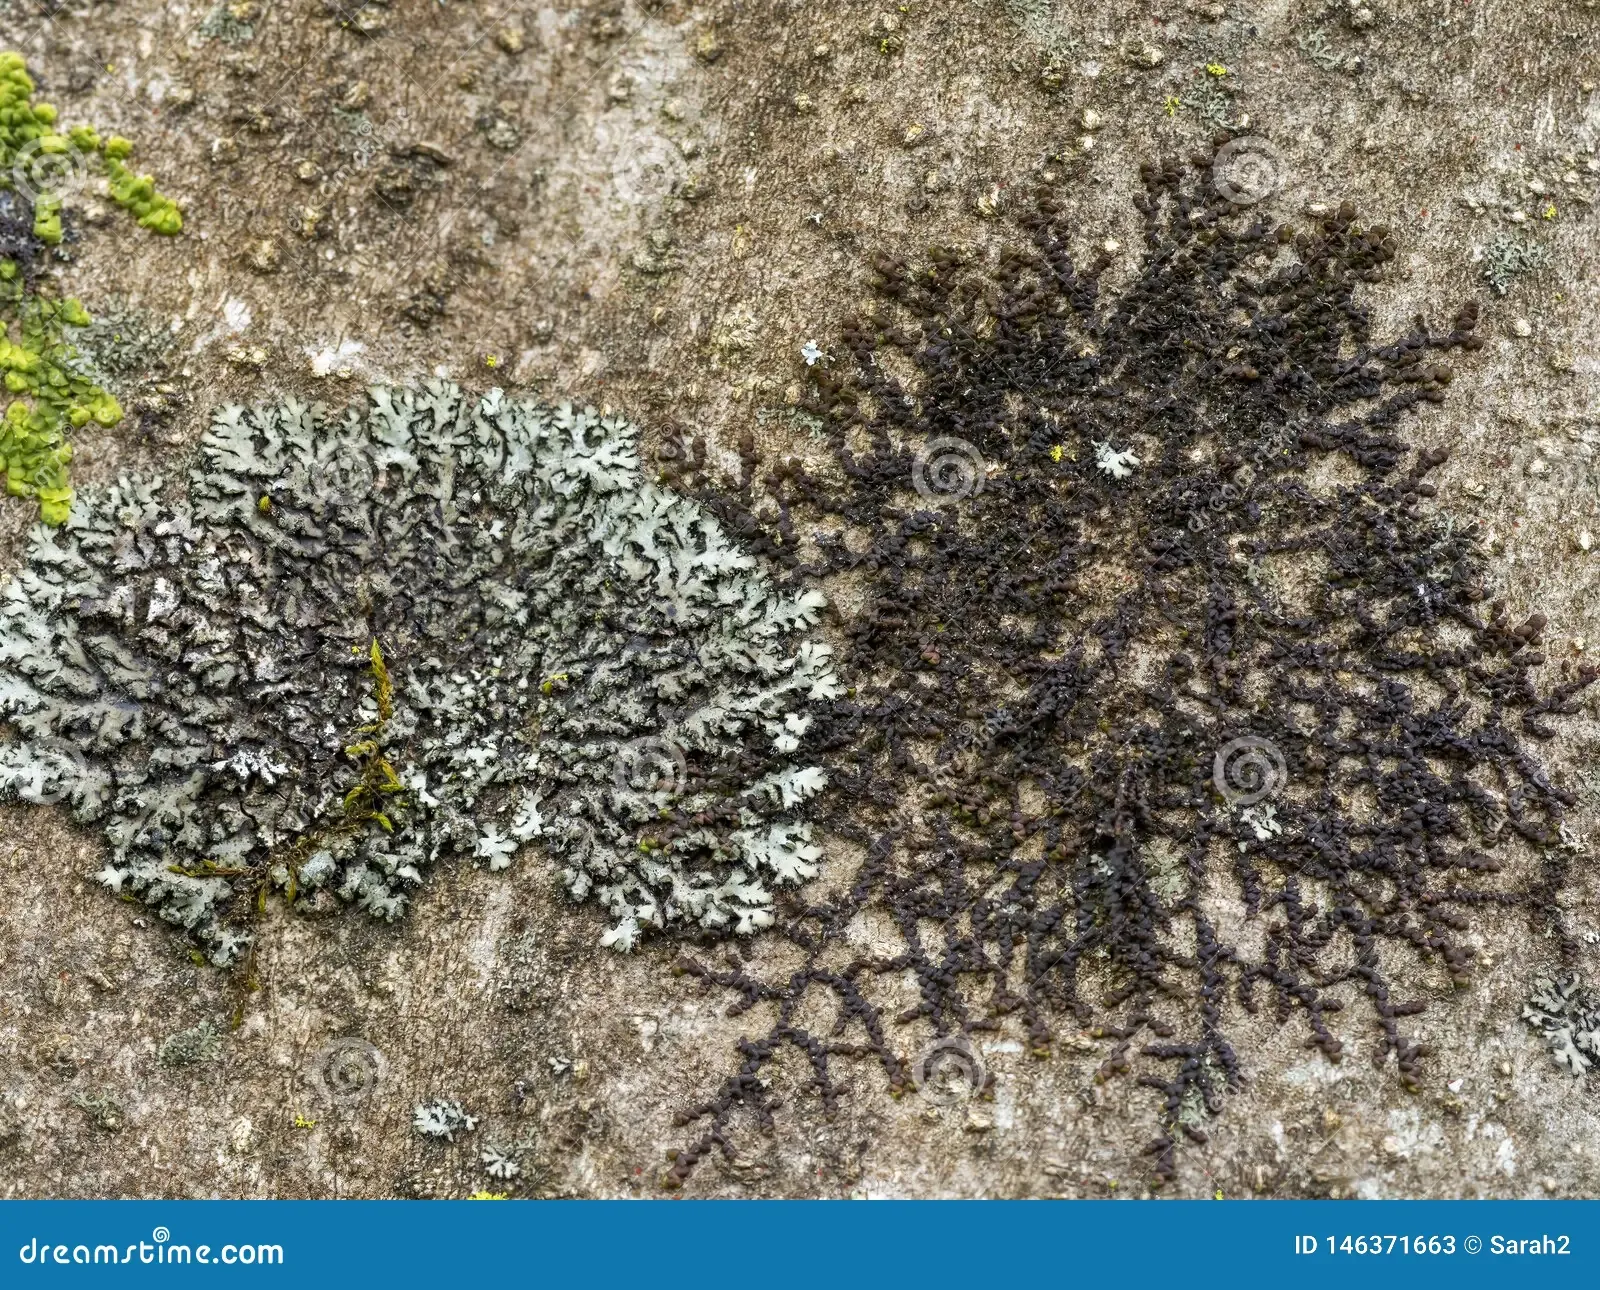 lichen-phaeophyscia-orbicularis-frullania-probably-dilatata-nature-detail-146371663.jpg